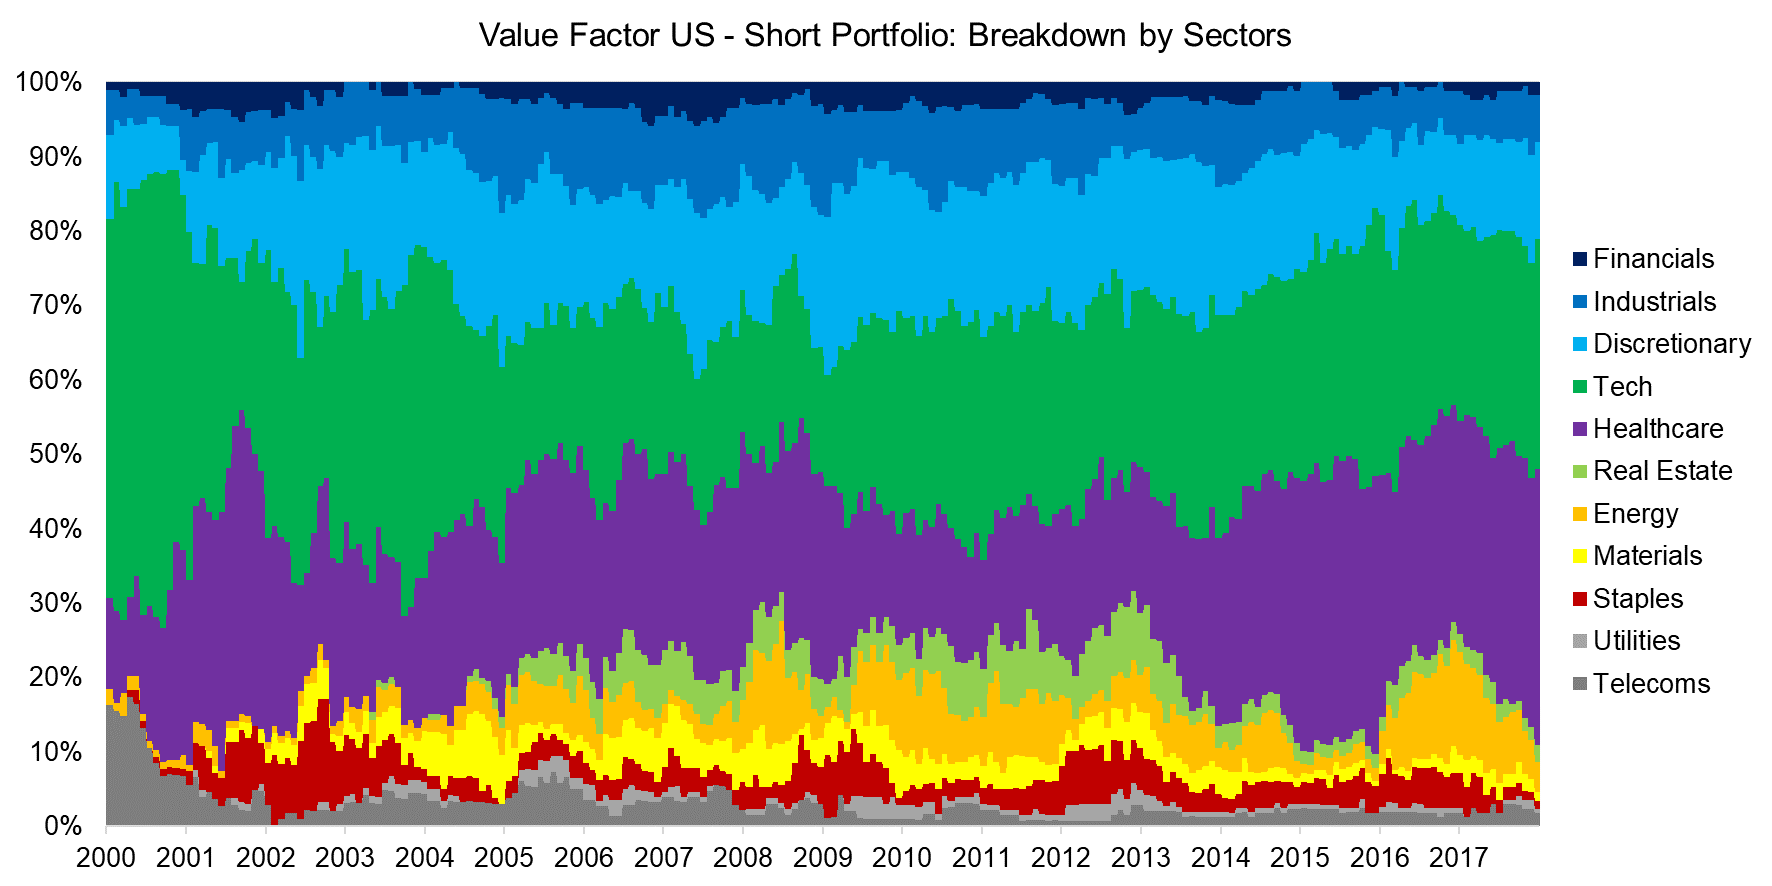 Value Factor US - Short Portfolio Breakdown by Sectors